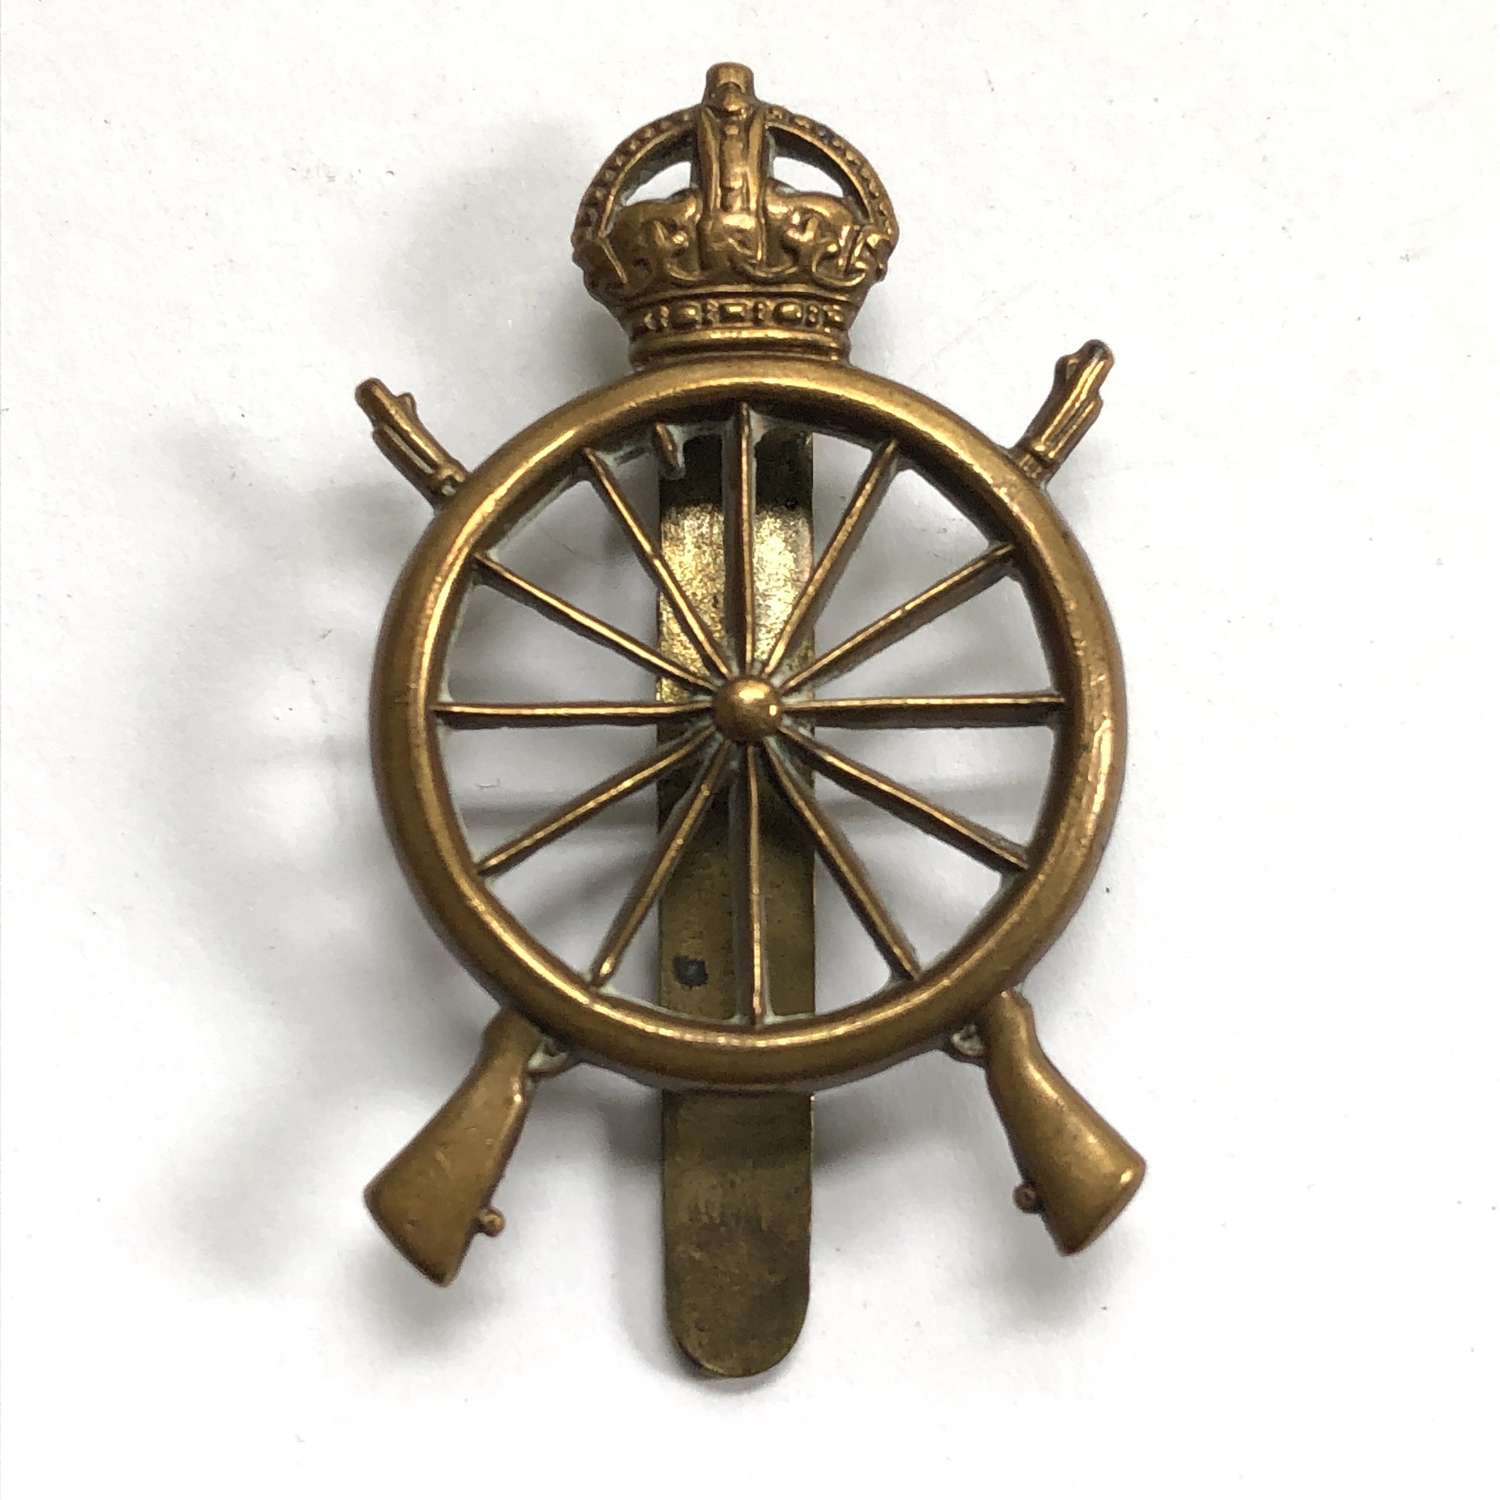 Northern Cyclists cap badge circa 1910-20